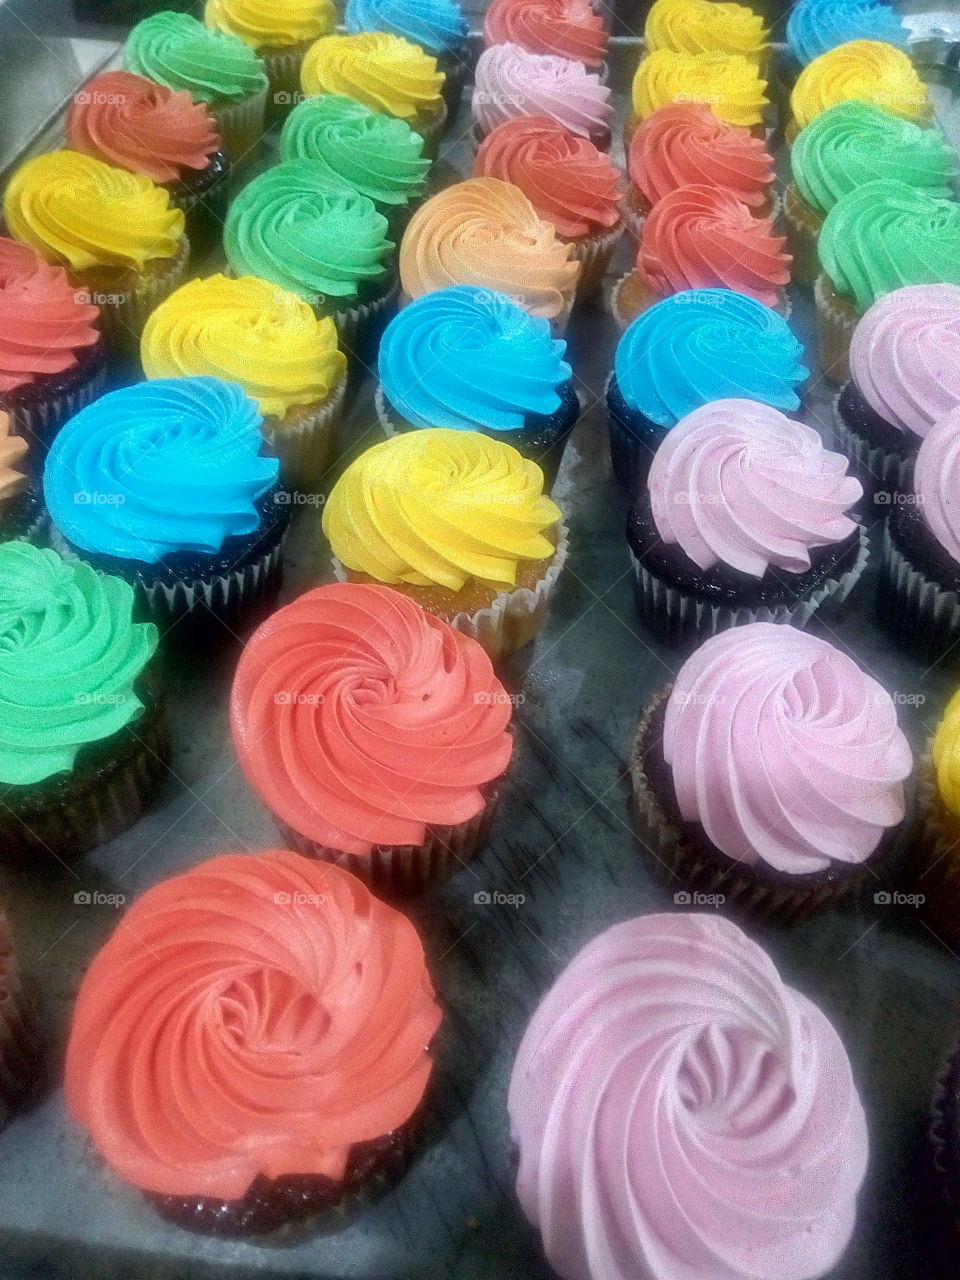 Colorful Chocolate/Vanilla Cupcakes...